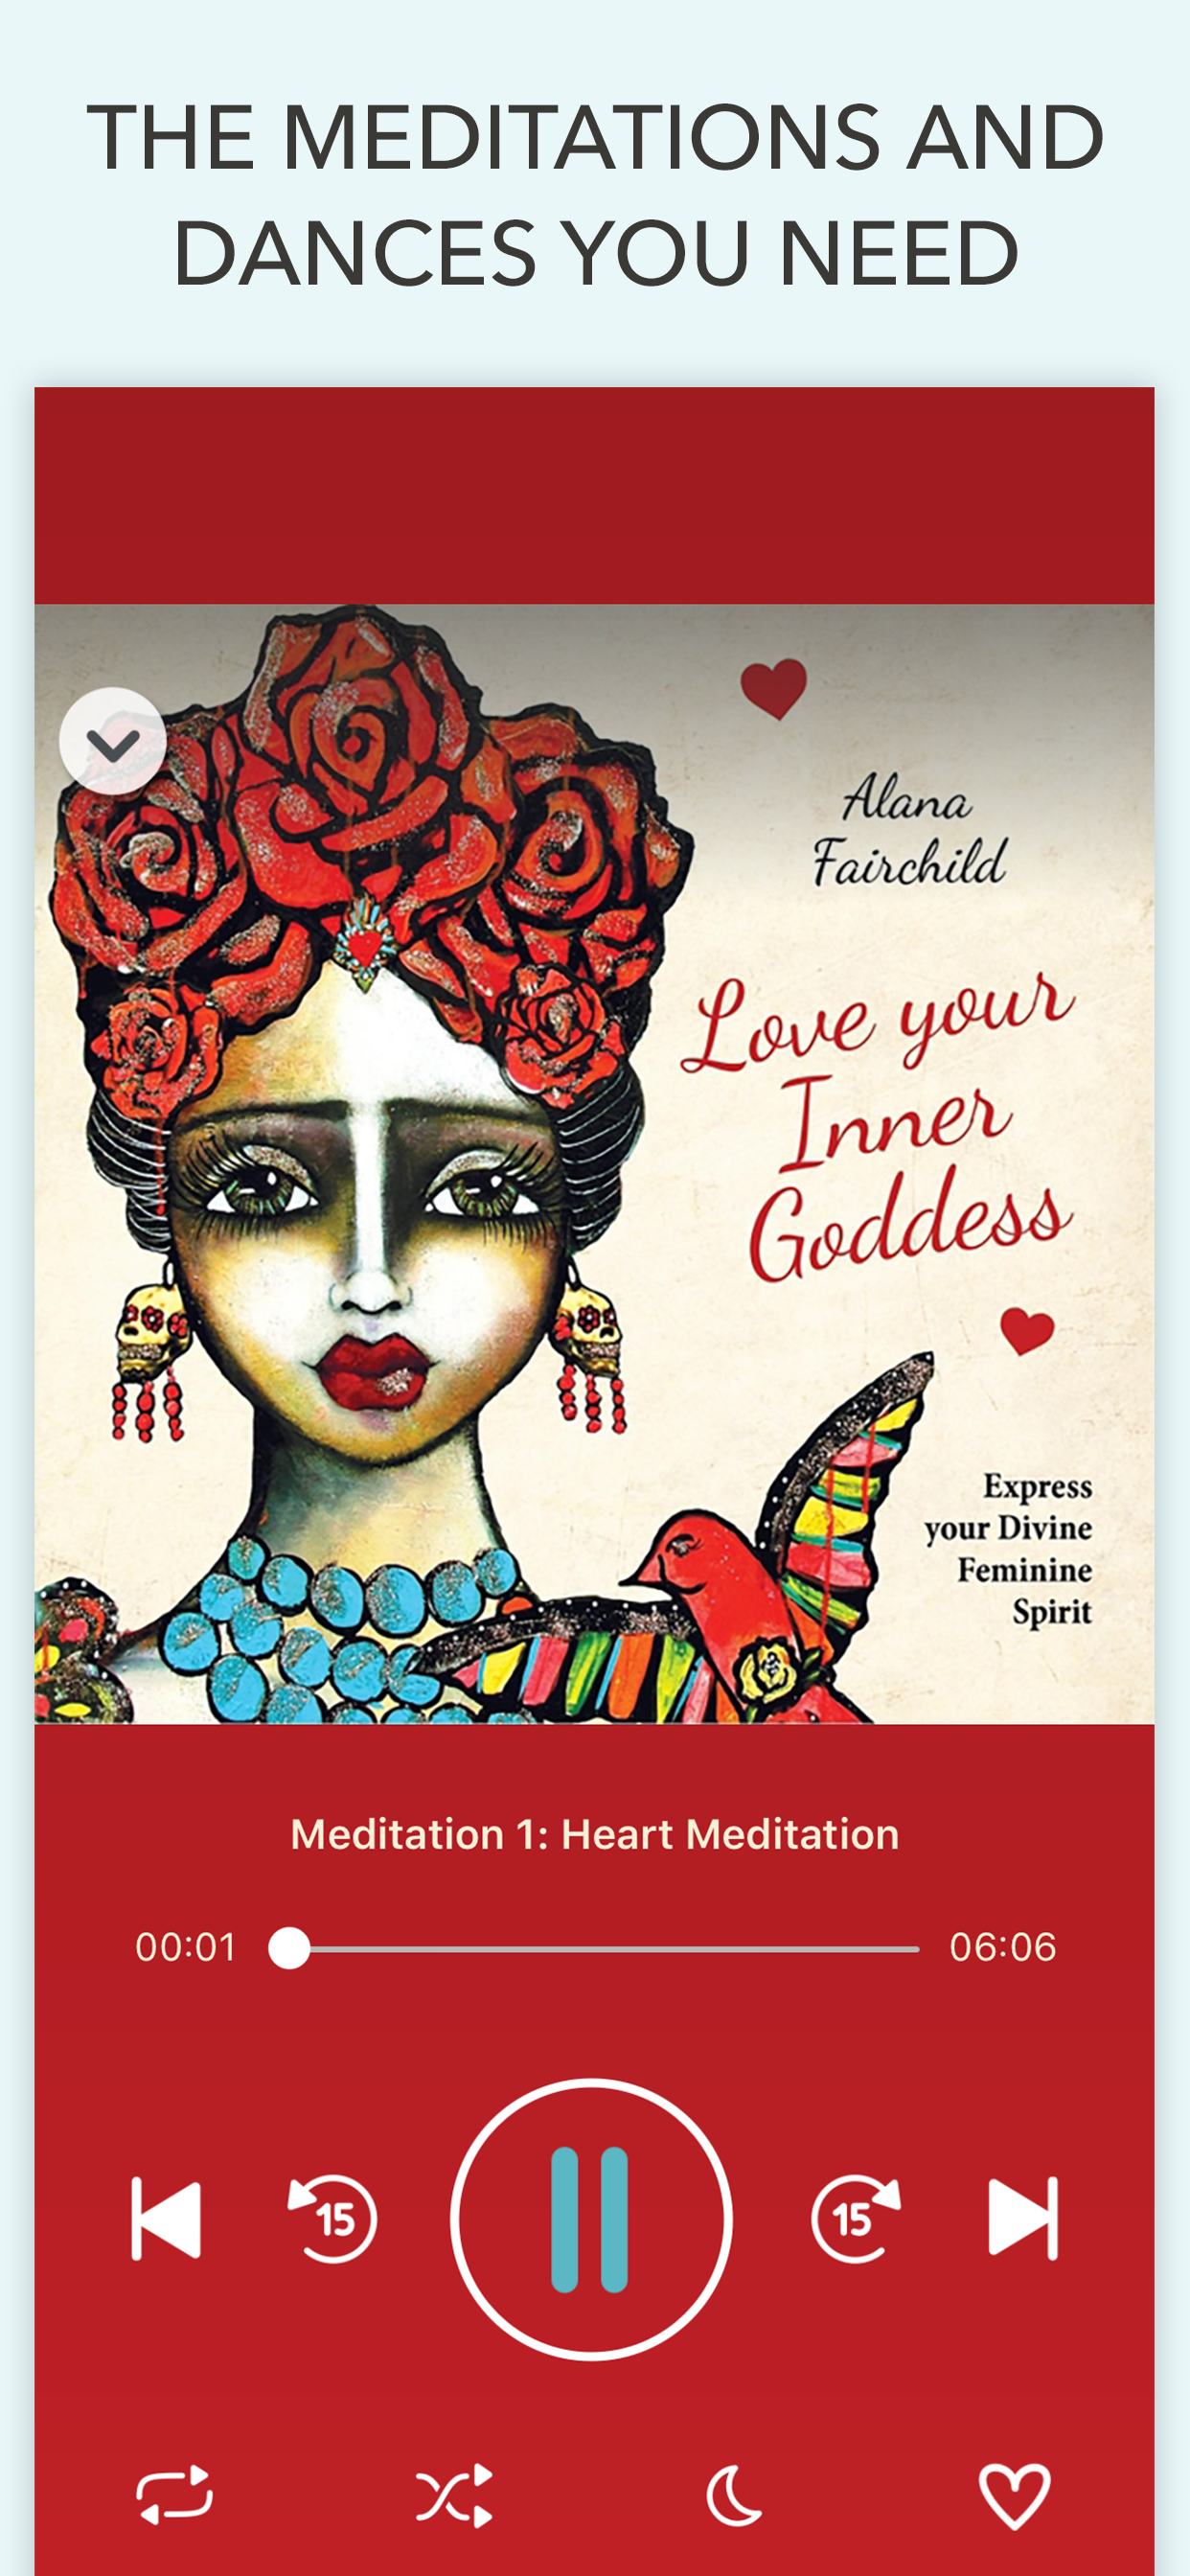 Love Your Inner Goddess Meditations and Dances by Alana Fairchild